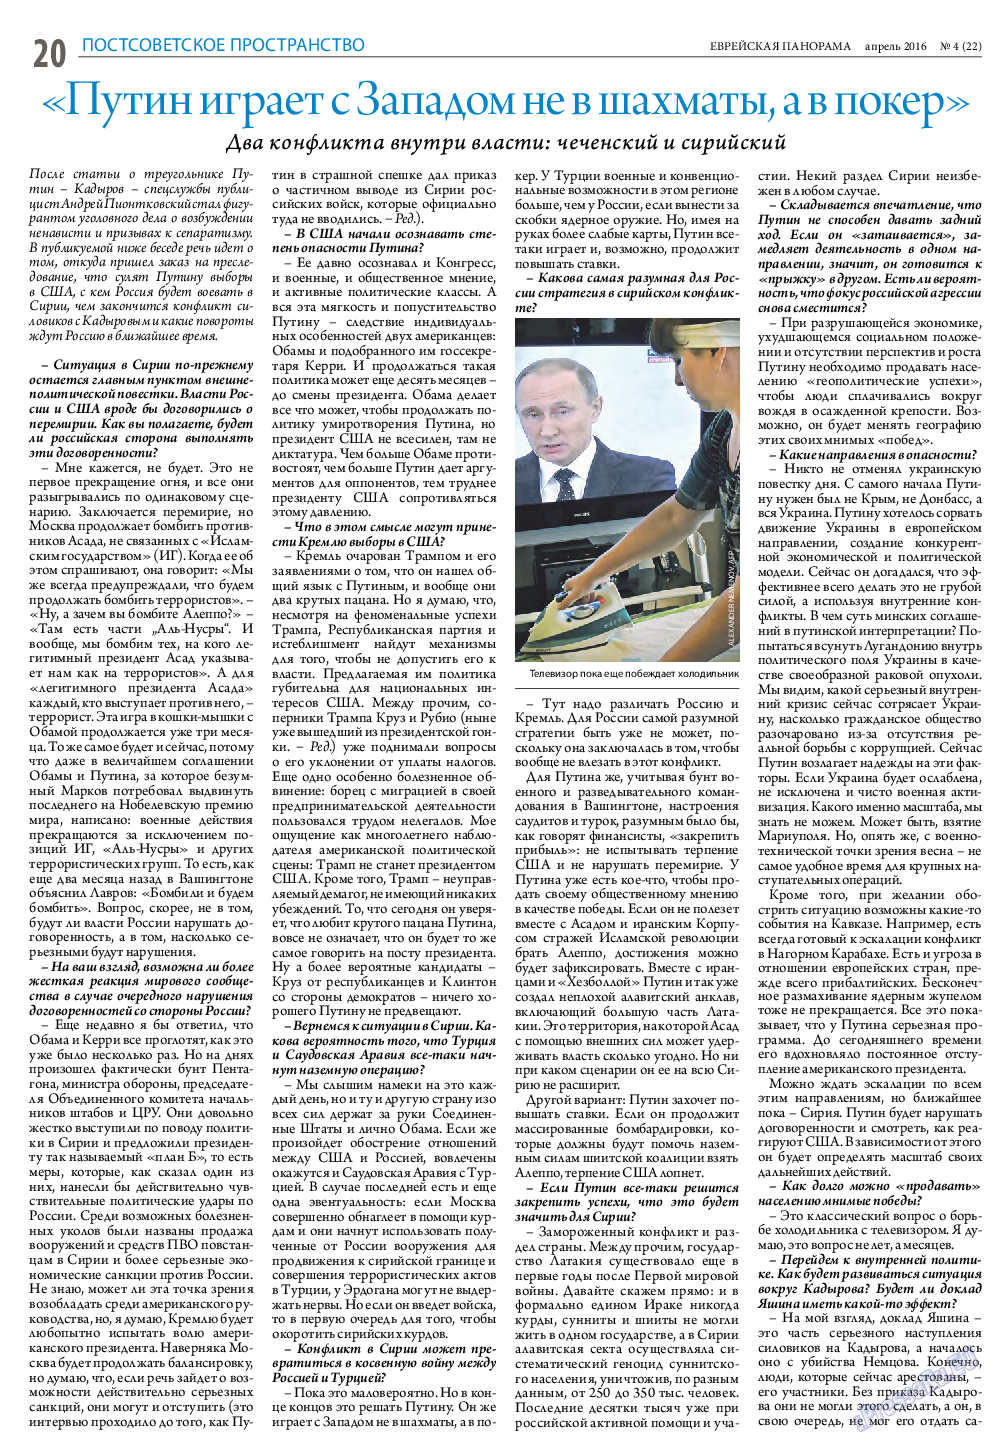 Еврейская панорама, газета. 2016 №4 стр.20